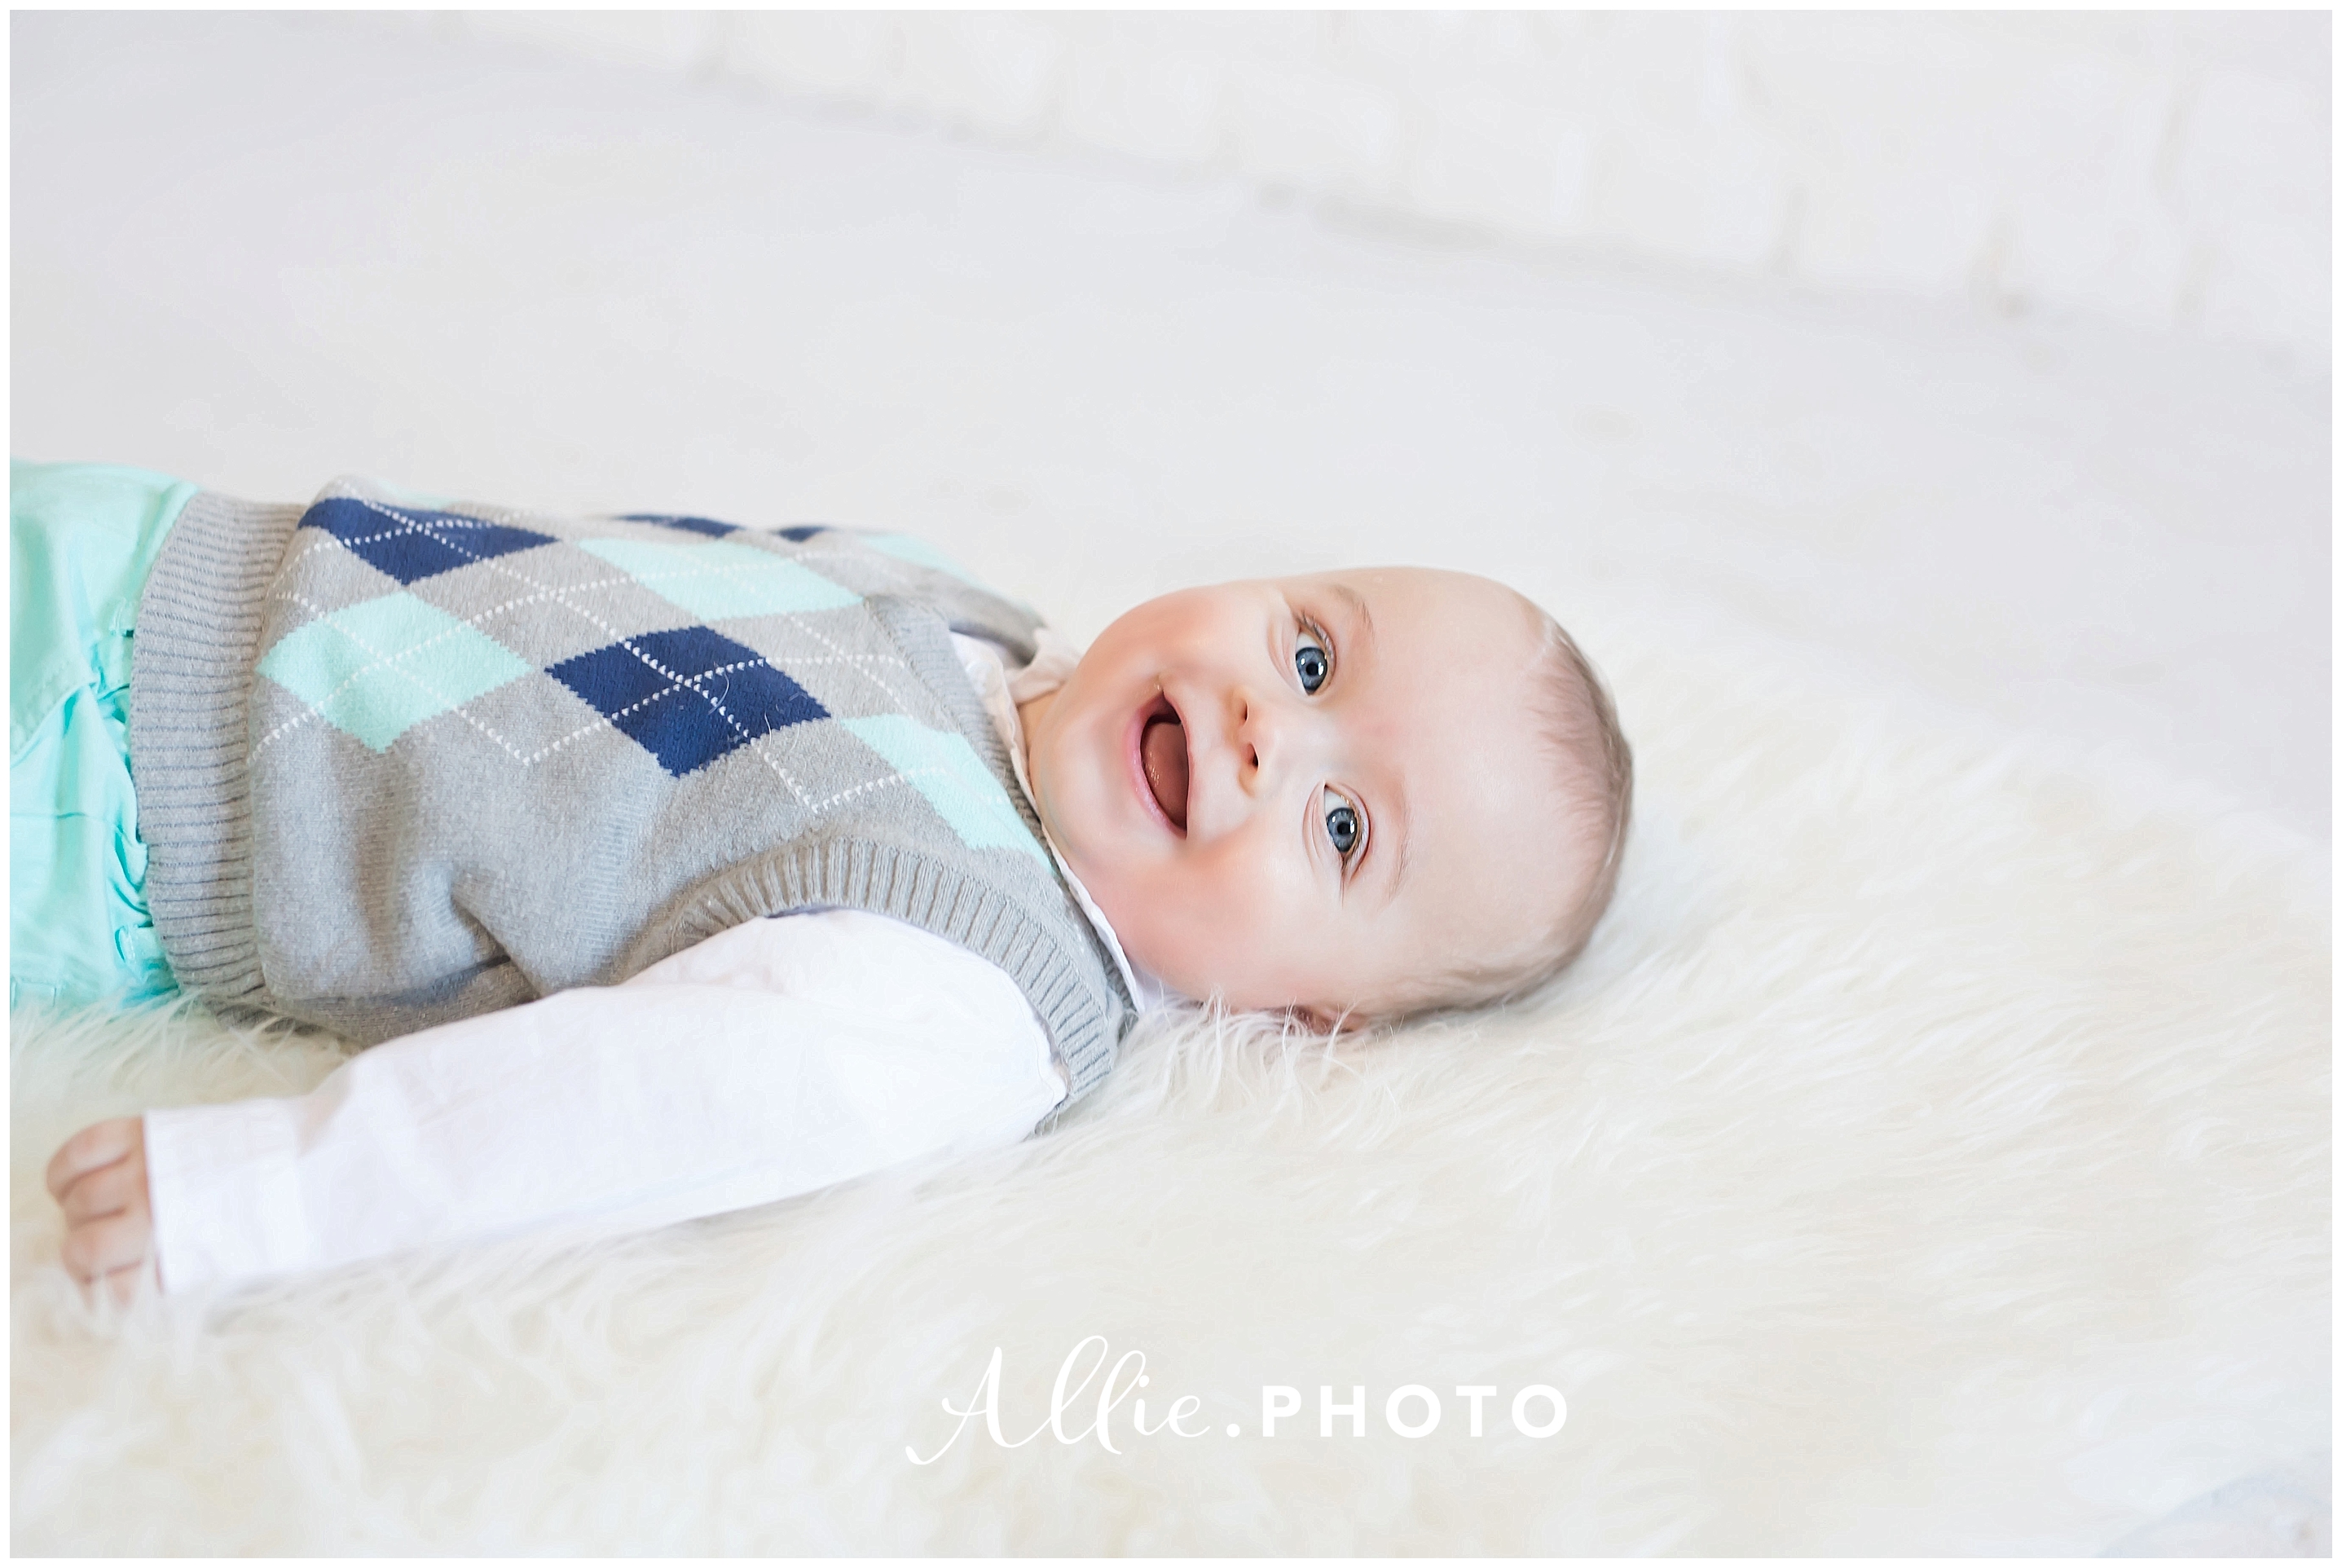 six-month-baby-boy-smile-white-fur-rug.jpg